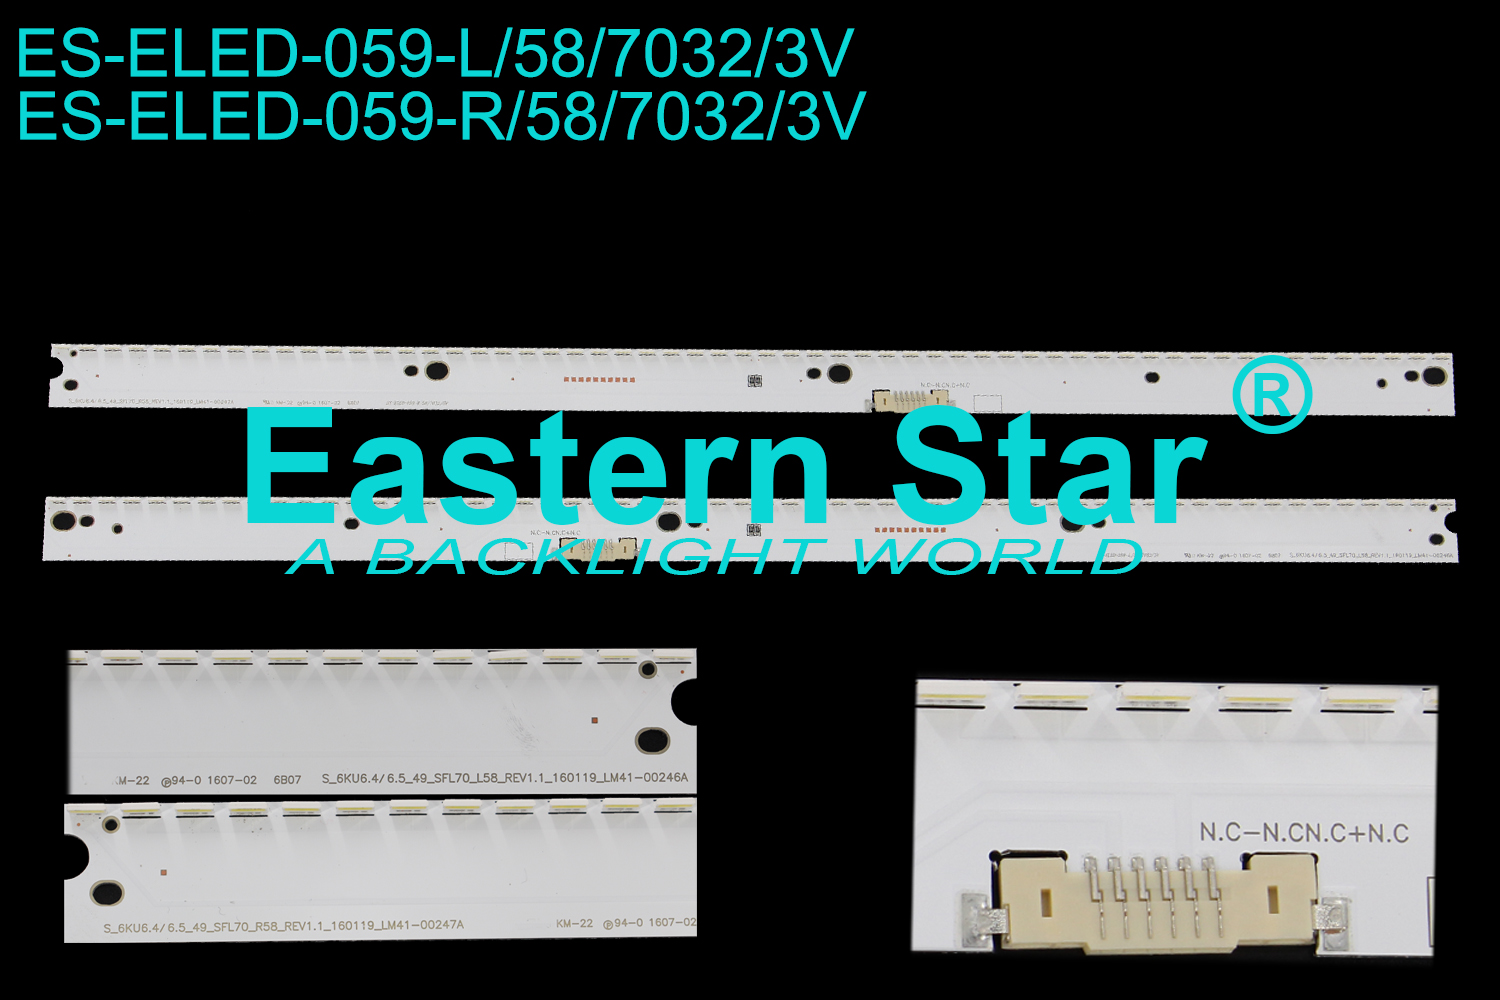 ES-ELED-059 ELED/EDGE TV Backlight use for Samsung 49" S_6KU6.4/6.5_49_SFL70_L58_REV1.1_160119_LM41-00329A  S_6KU6.4/6.5_49_SFL70_R58_REV1.1_160119_LM41-00320A